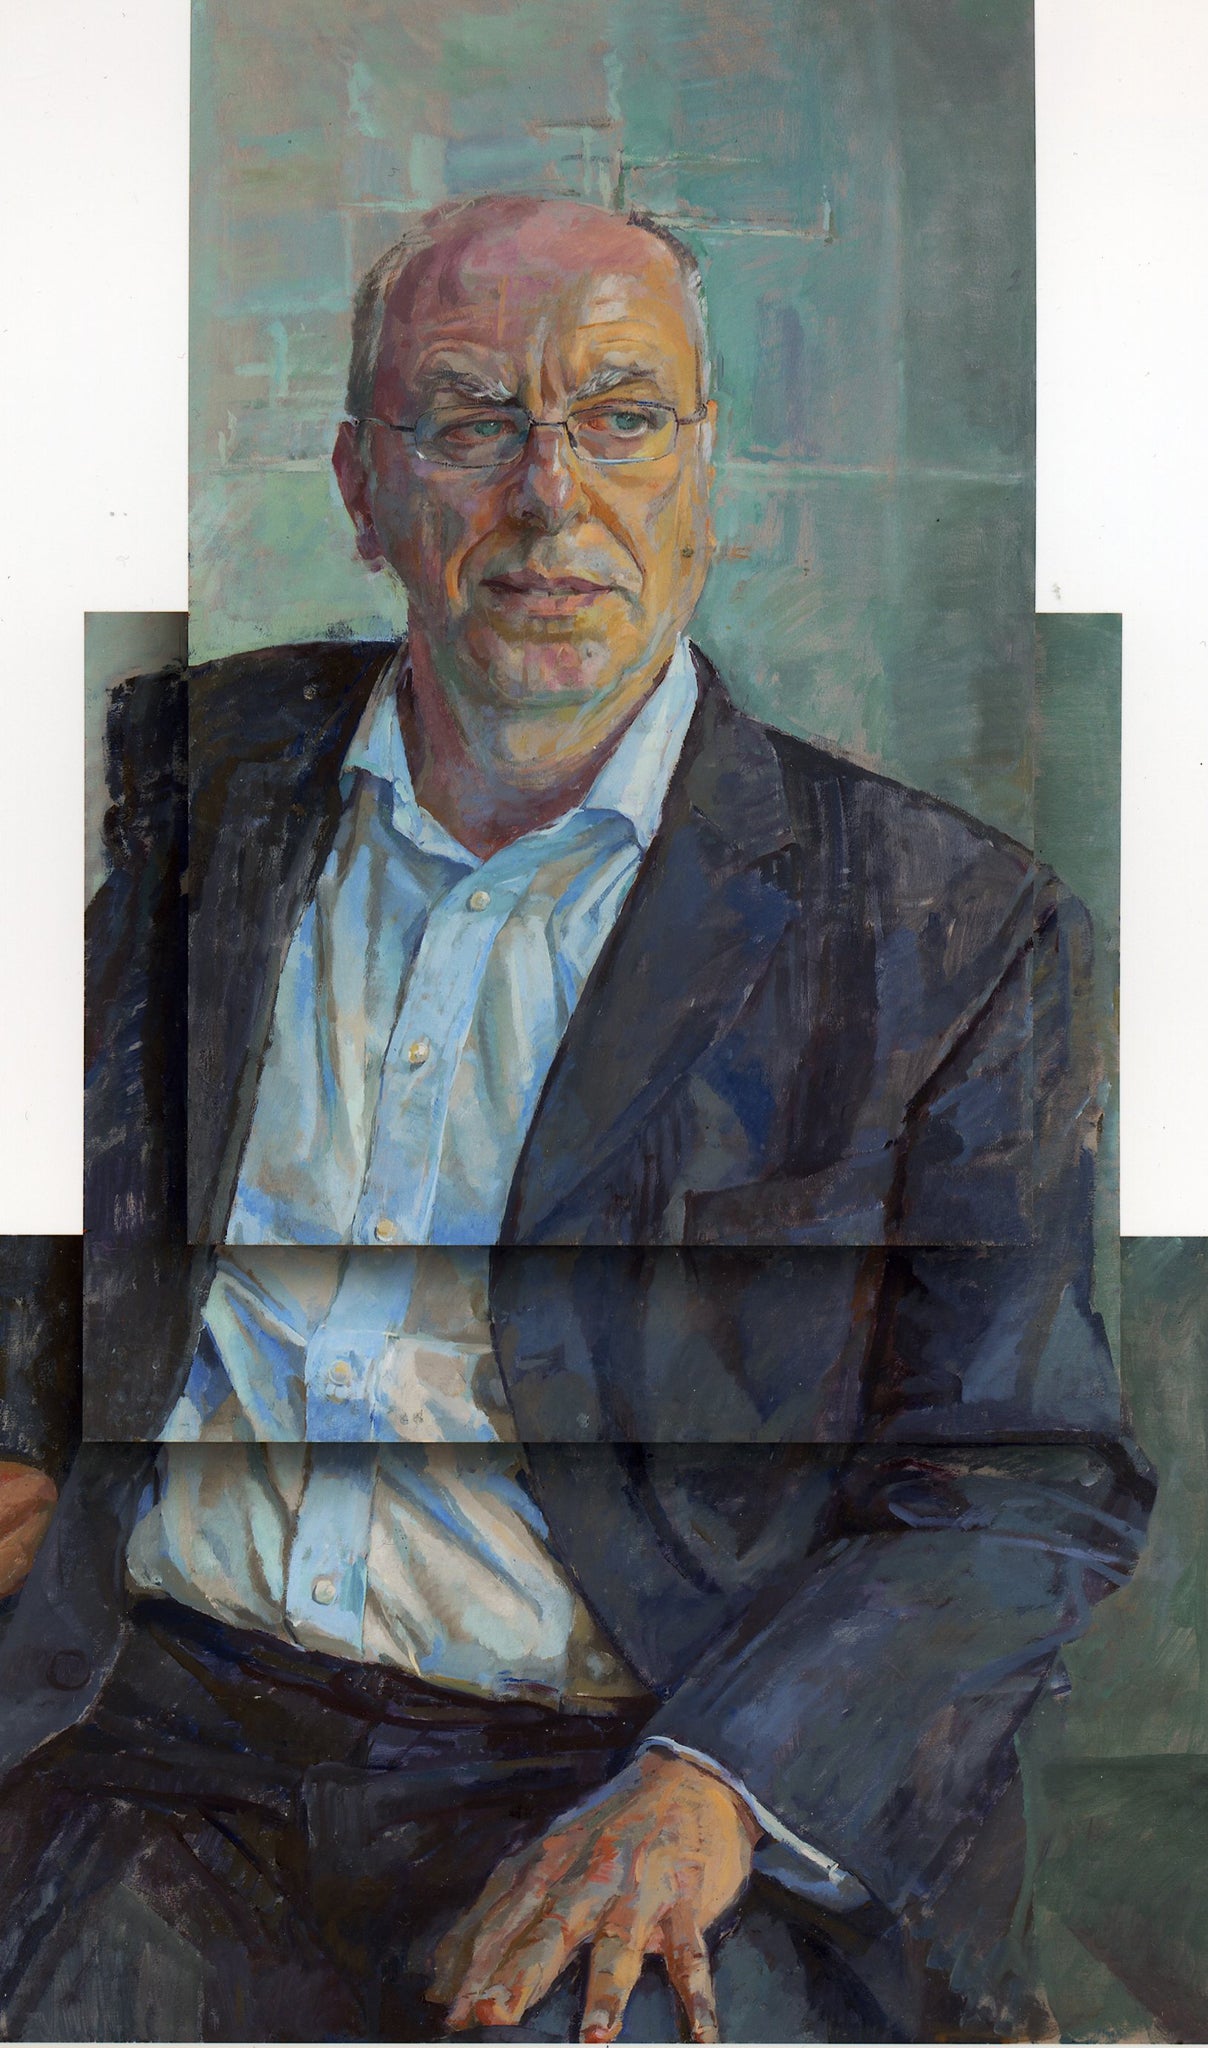 Daphne Todd's portrait of David Lister